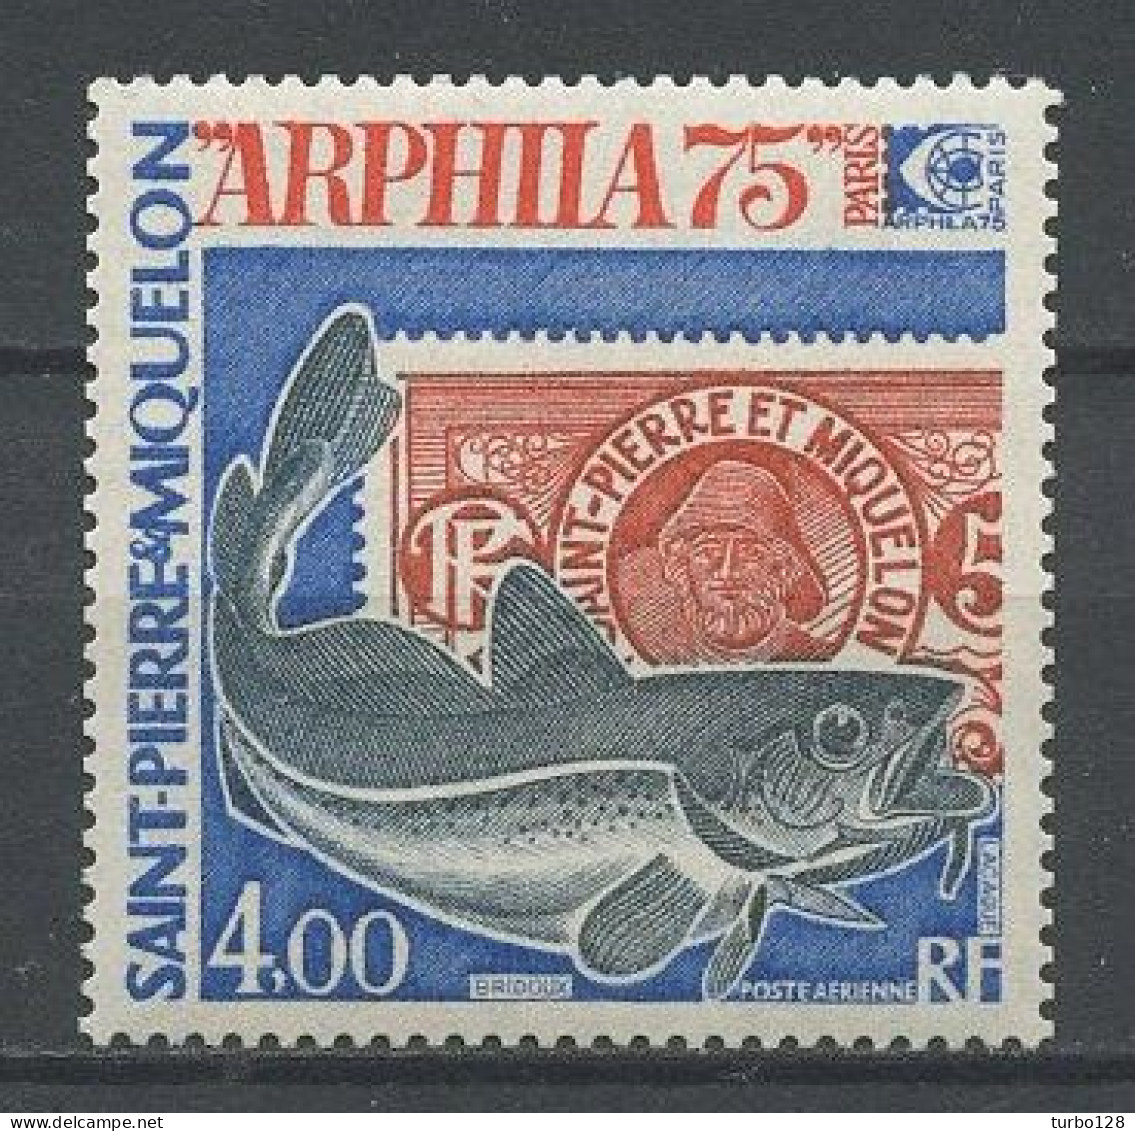 SPM MIQUELON 1975 PA N° 60 ** Neuf MNH Superbe C 25,20 € ARPHILA 75 Poissons Fishes Animaux Exposition Philatélique - Ongebruikt